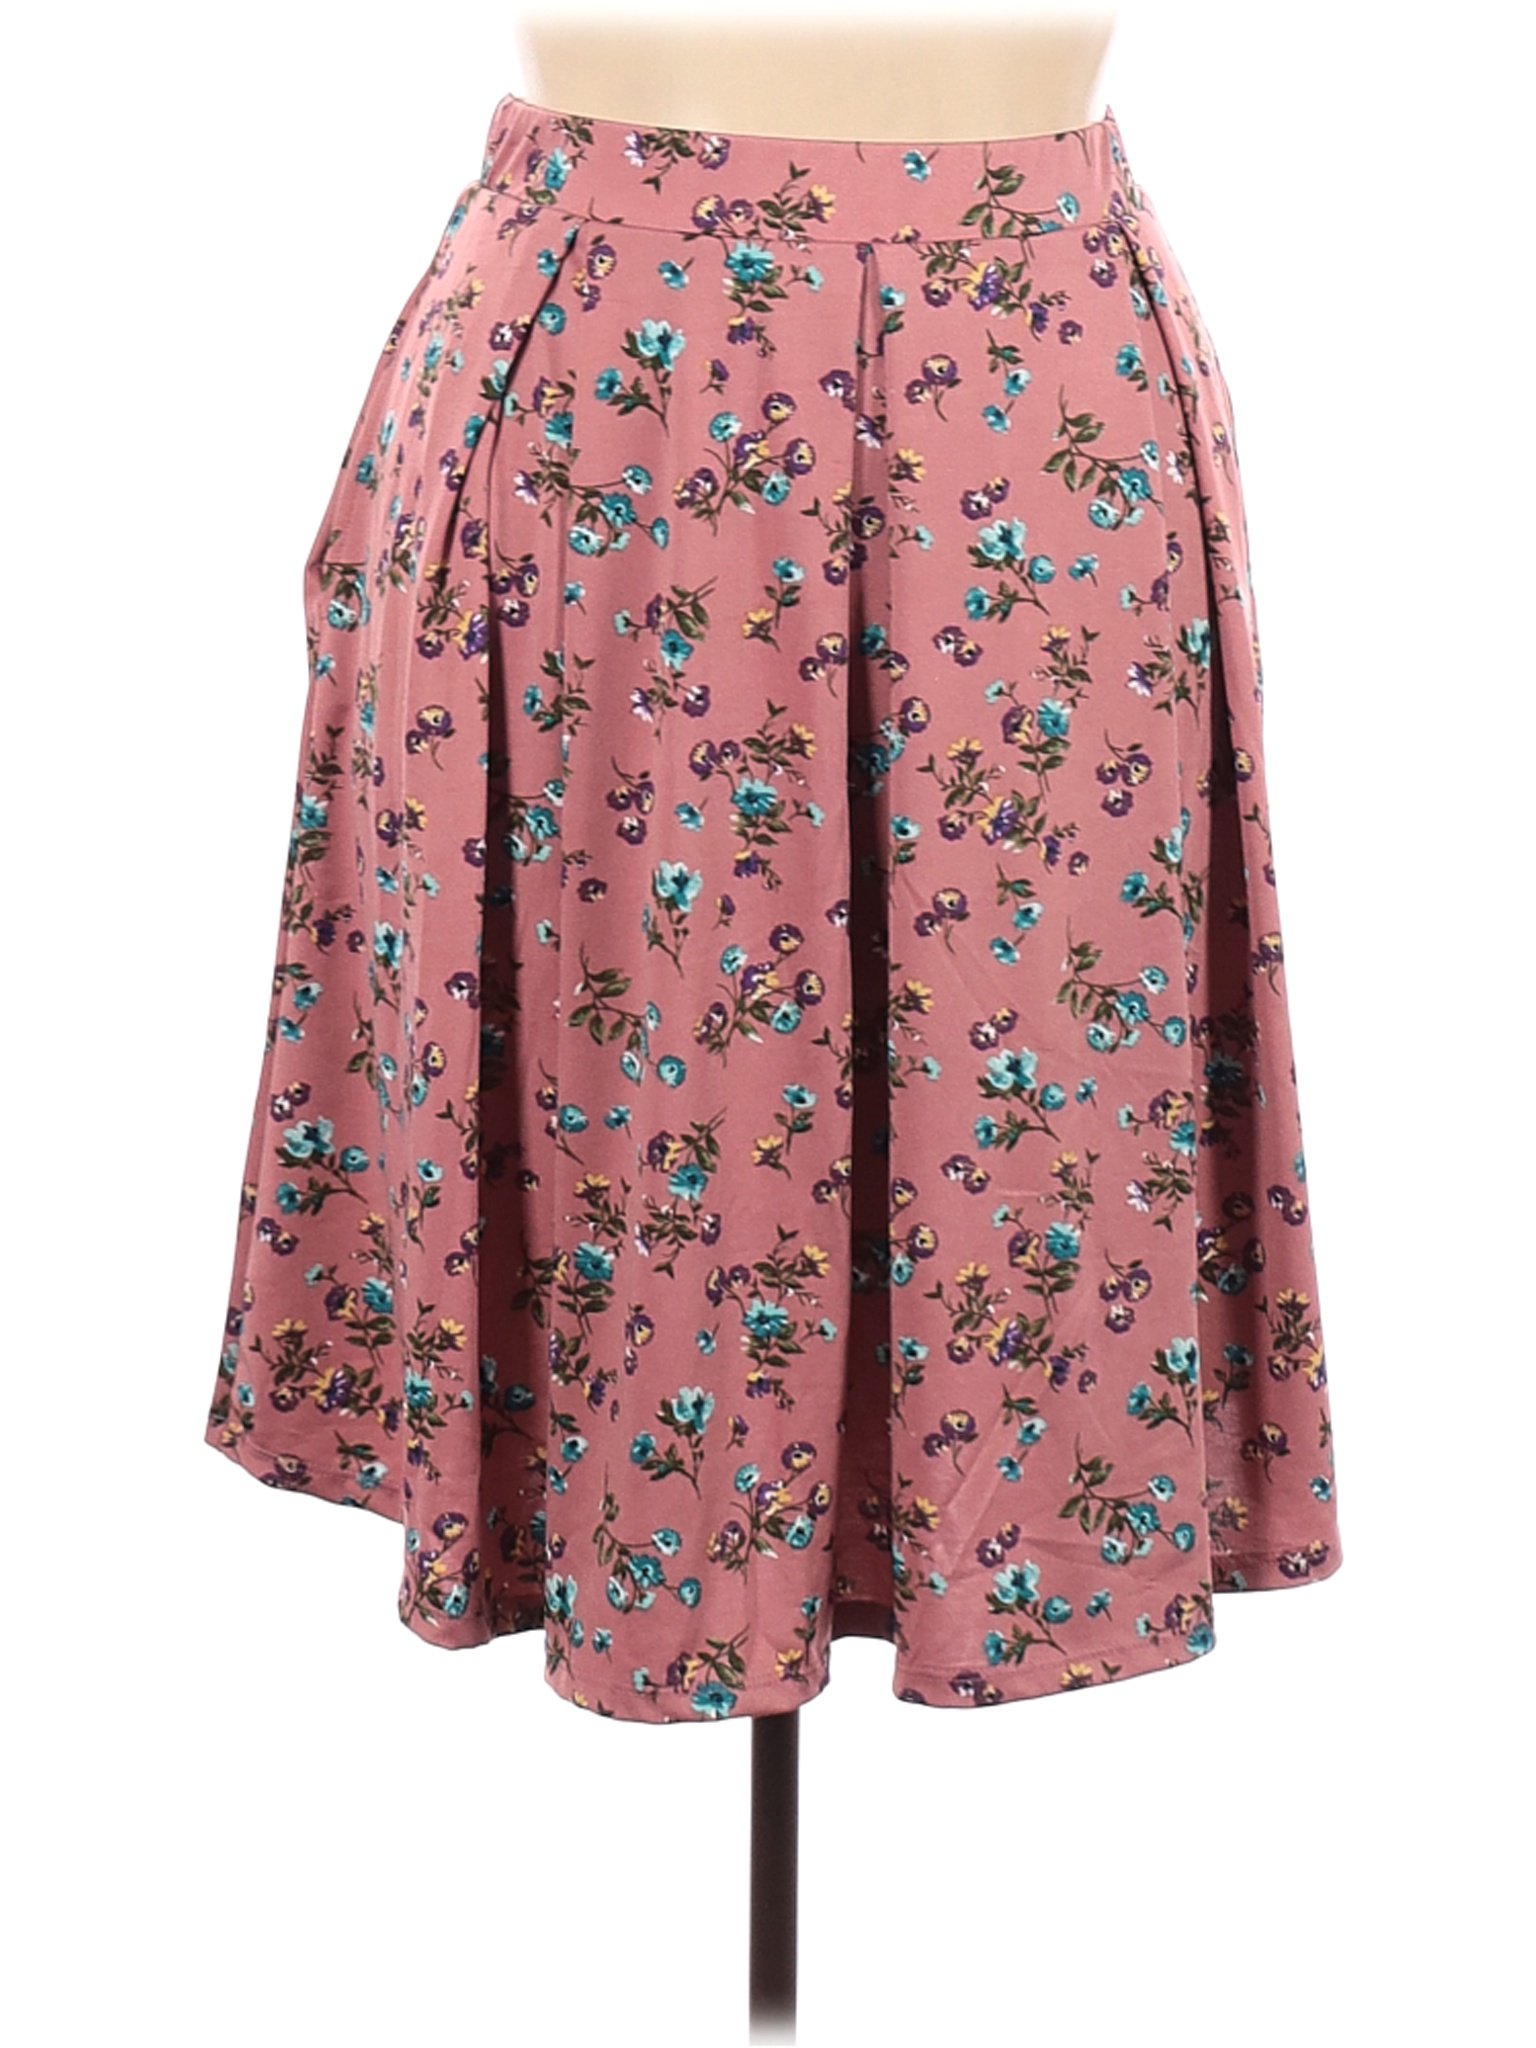 Lularoe Women Pink Casual Skirt XL | eBay